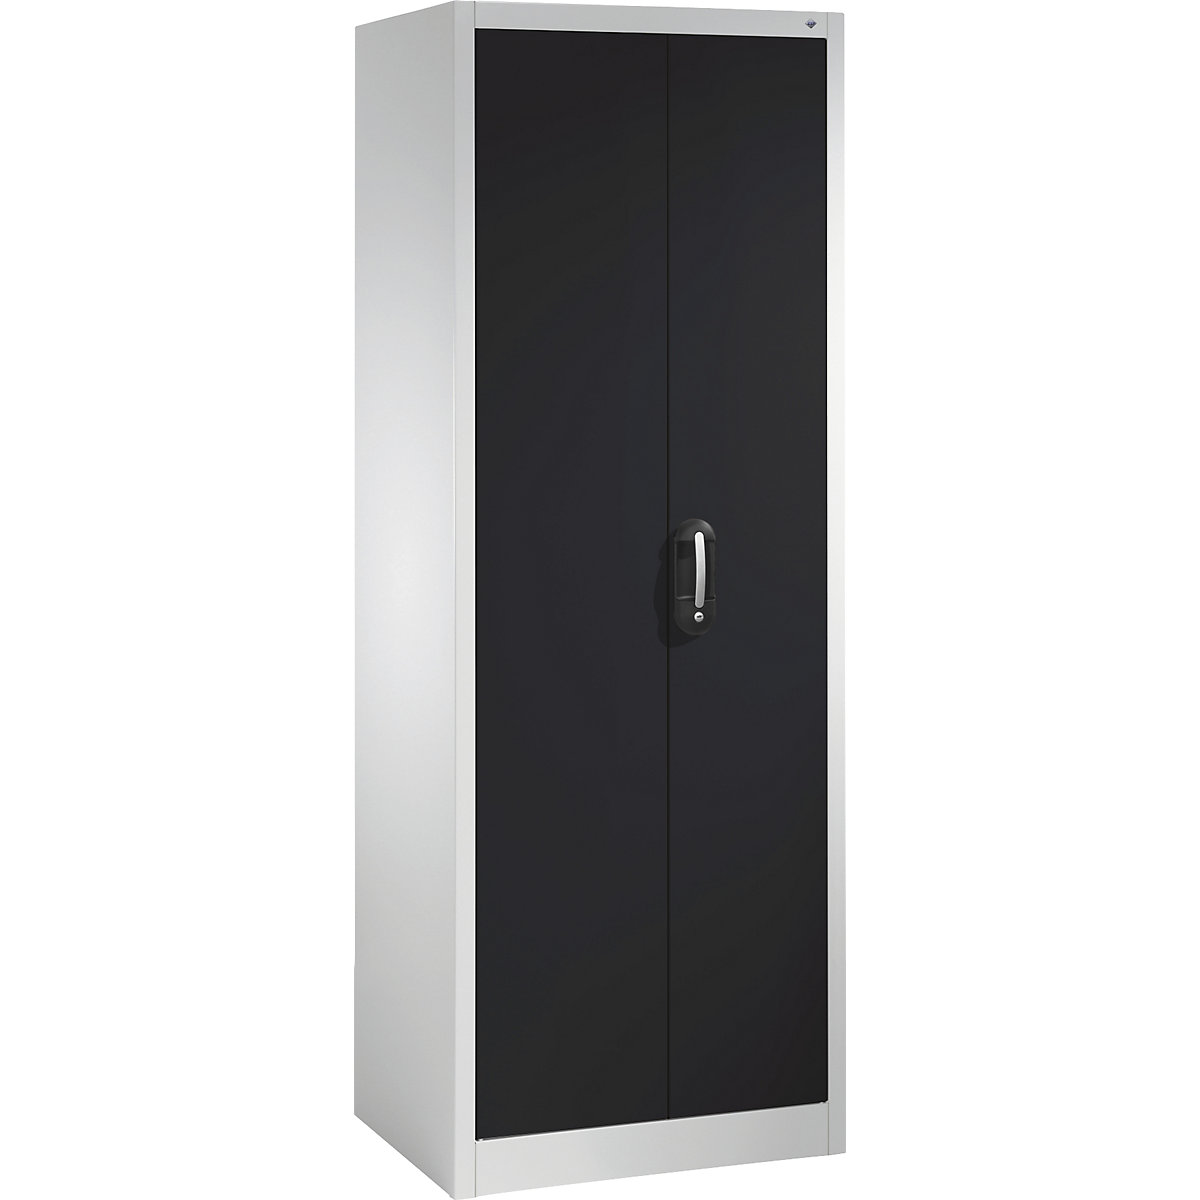 ACURADO universal cupboard – C+P, WxD 700 x 500 mm, light grey / black grey-24